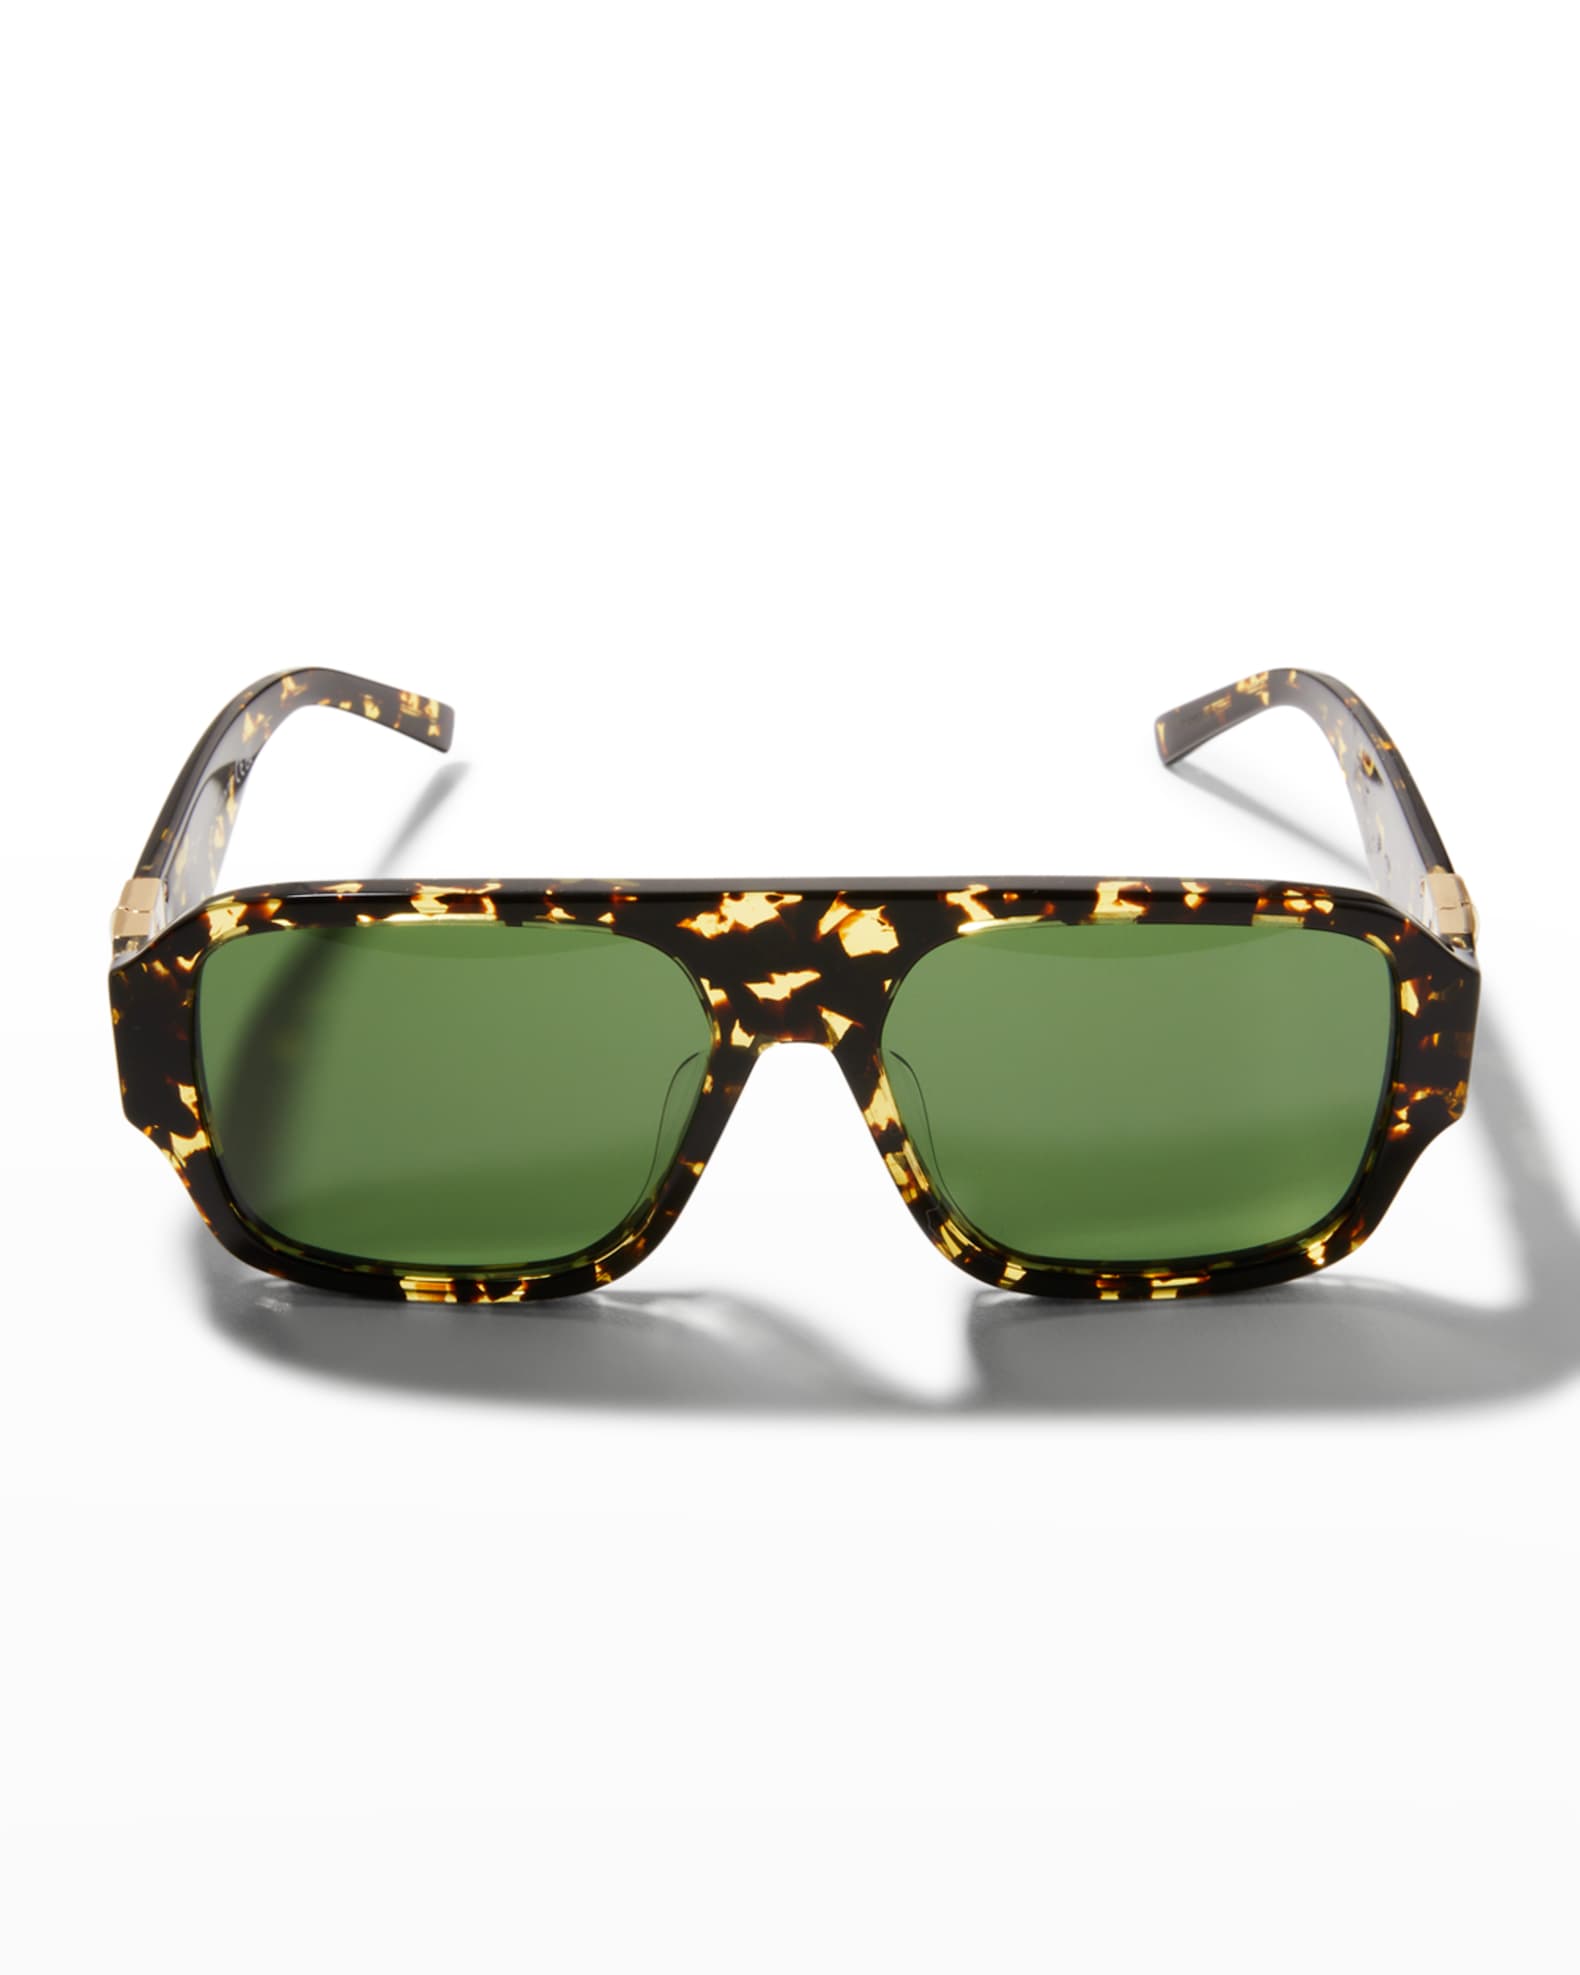 Givenchy Square Acetate Sunglasses | Neiman Marcus